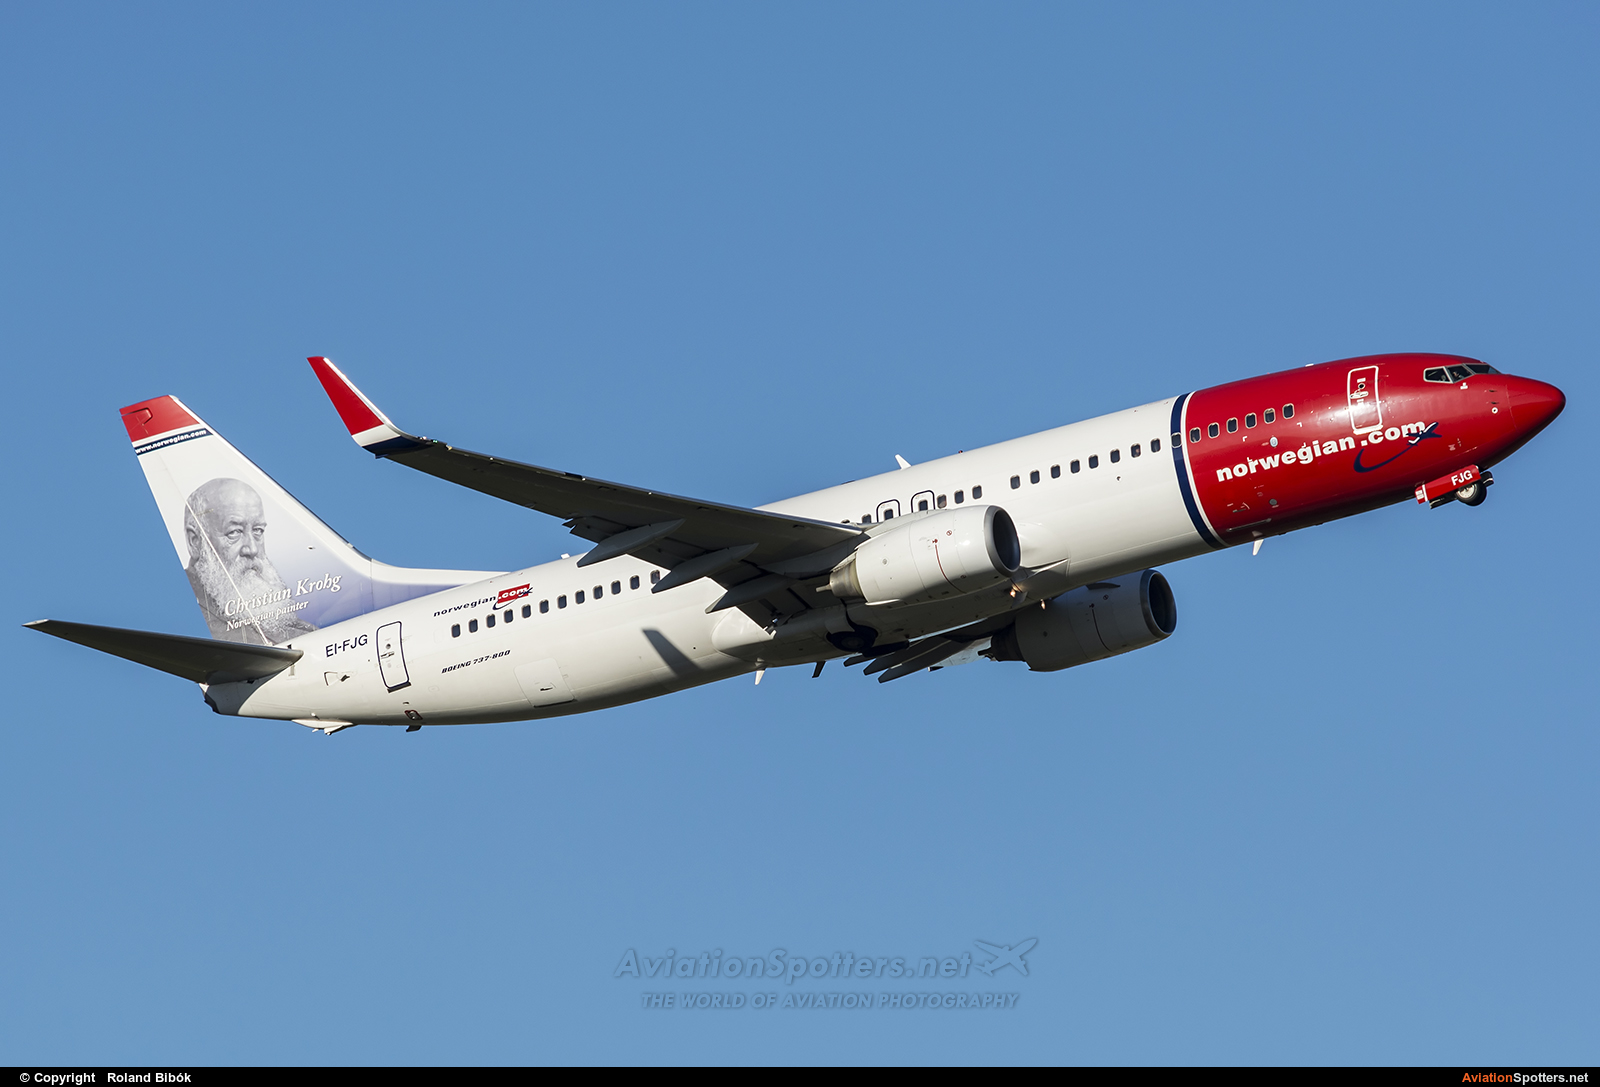 Norwegian Air Shuttle  -  737-800  (EI-FJG) By Roland Bibók (Roland Bibok)